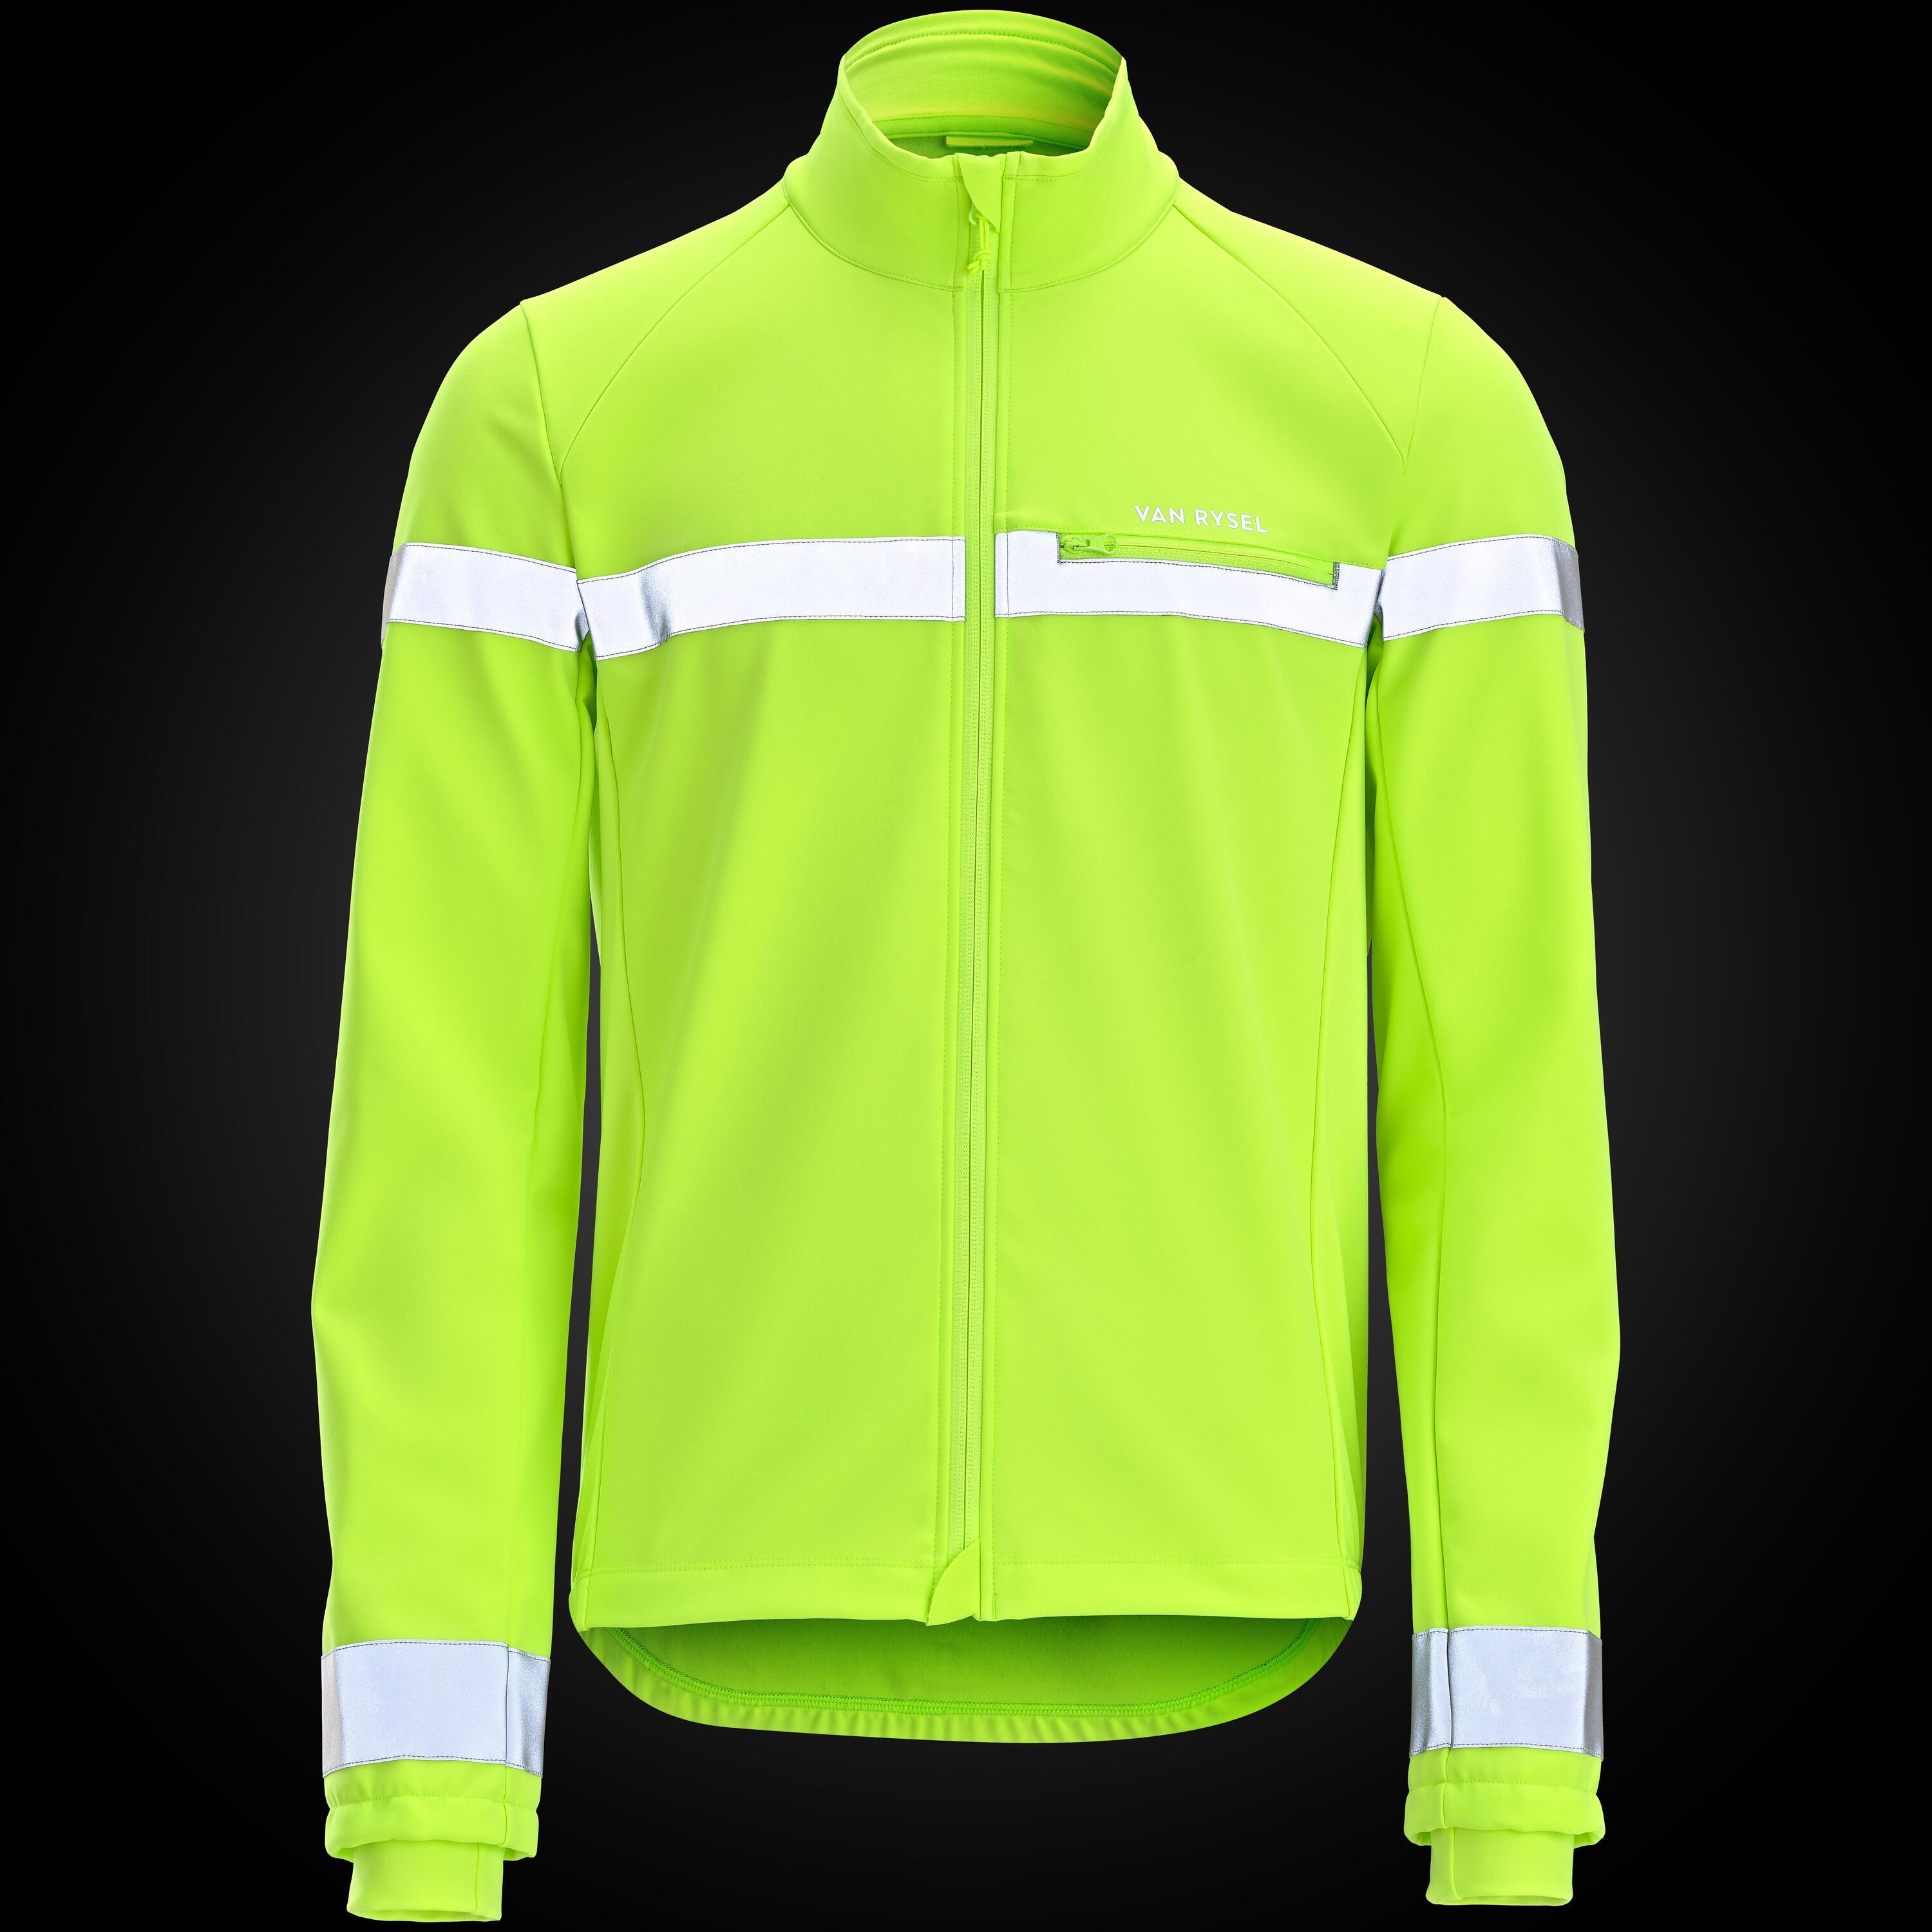 Men's Long-Sleeved Road Cycling Winter Jacket Discover EN17353 8/9